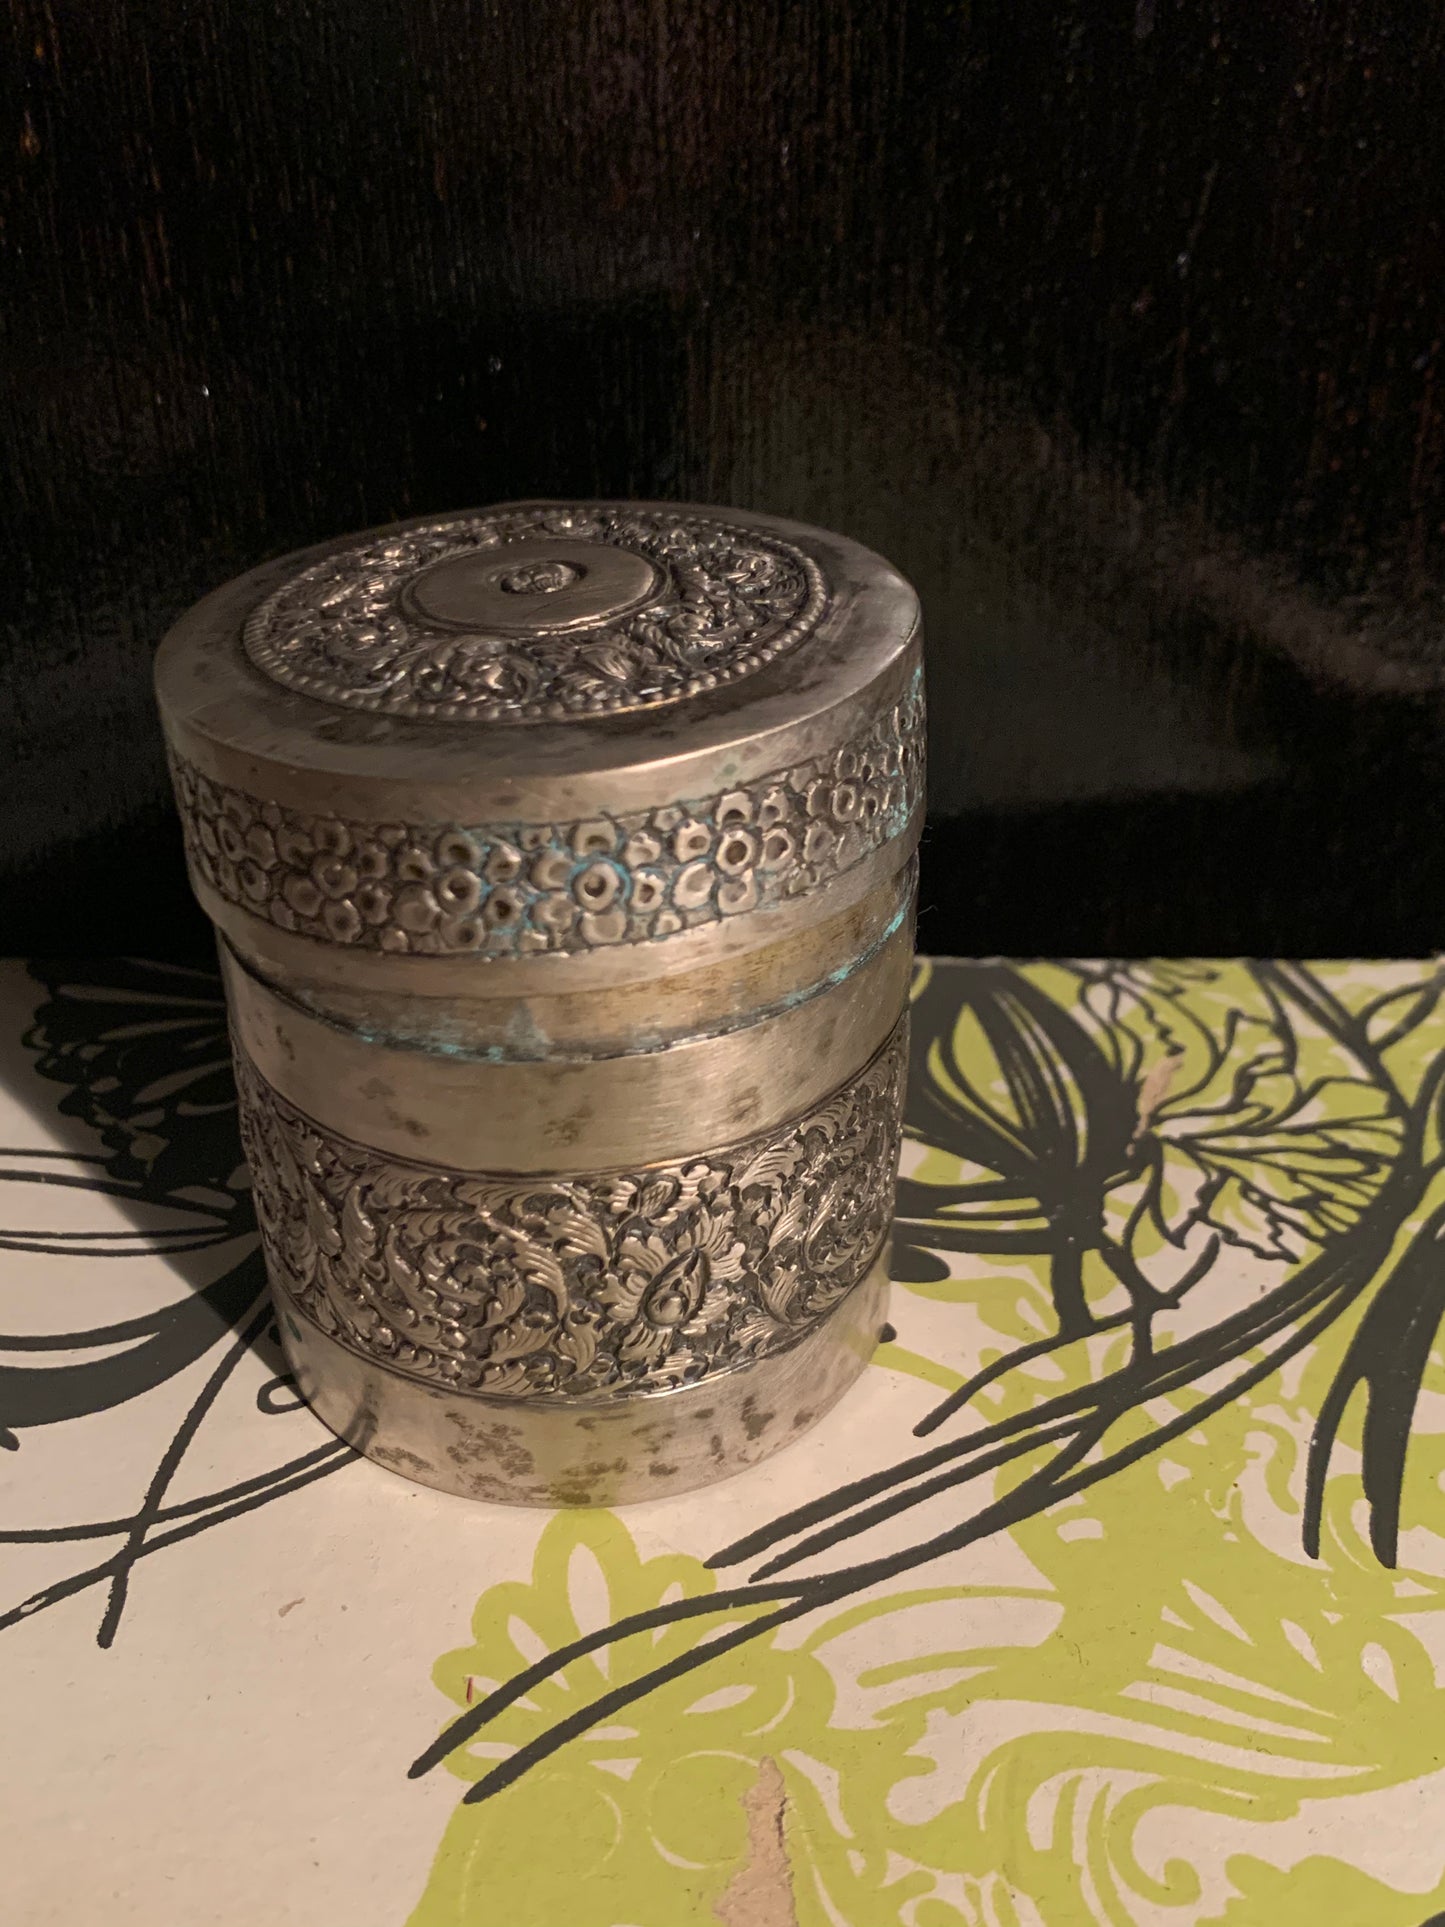 A cylindrical metal box